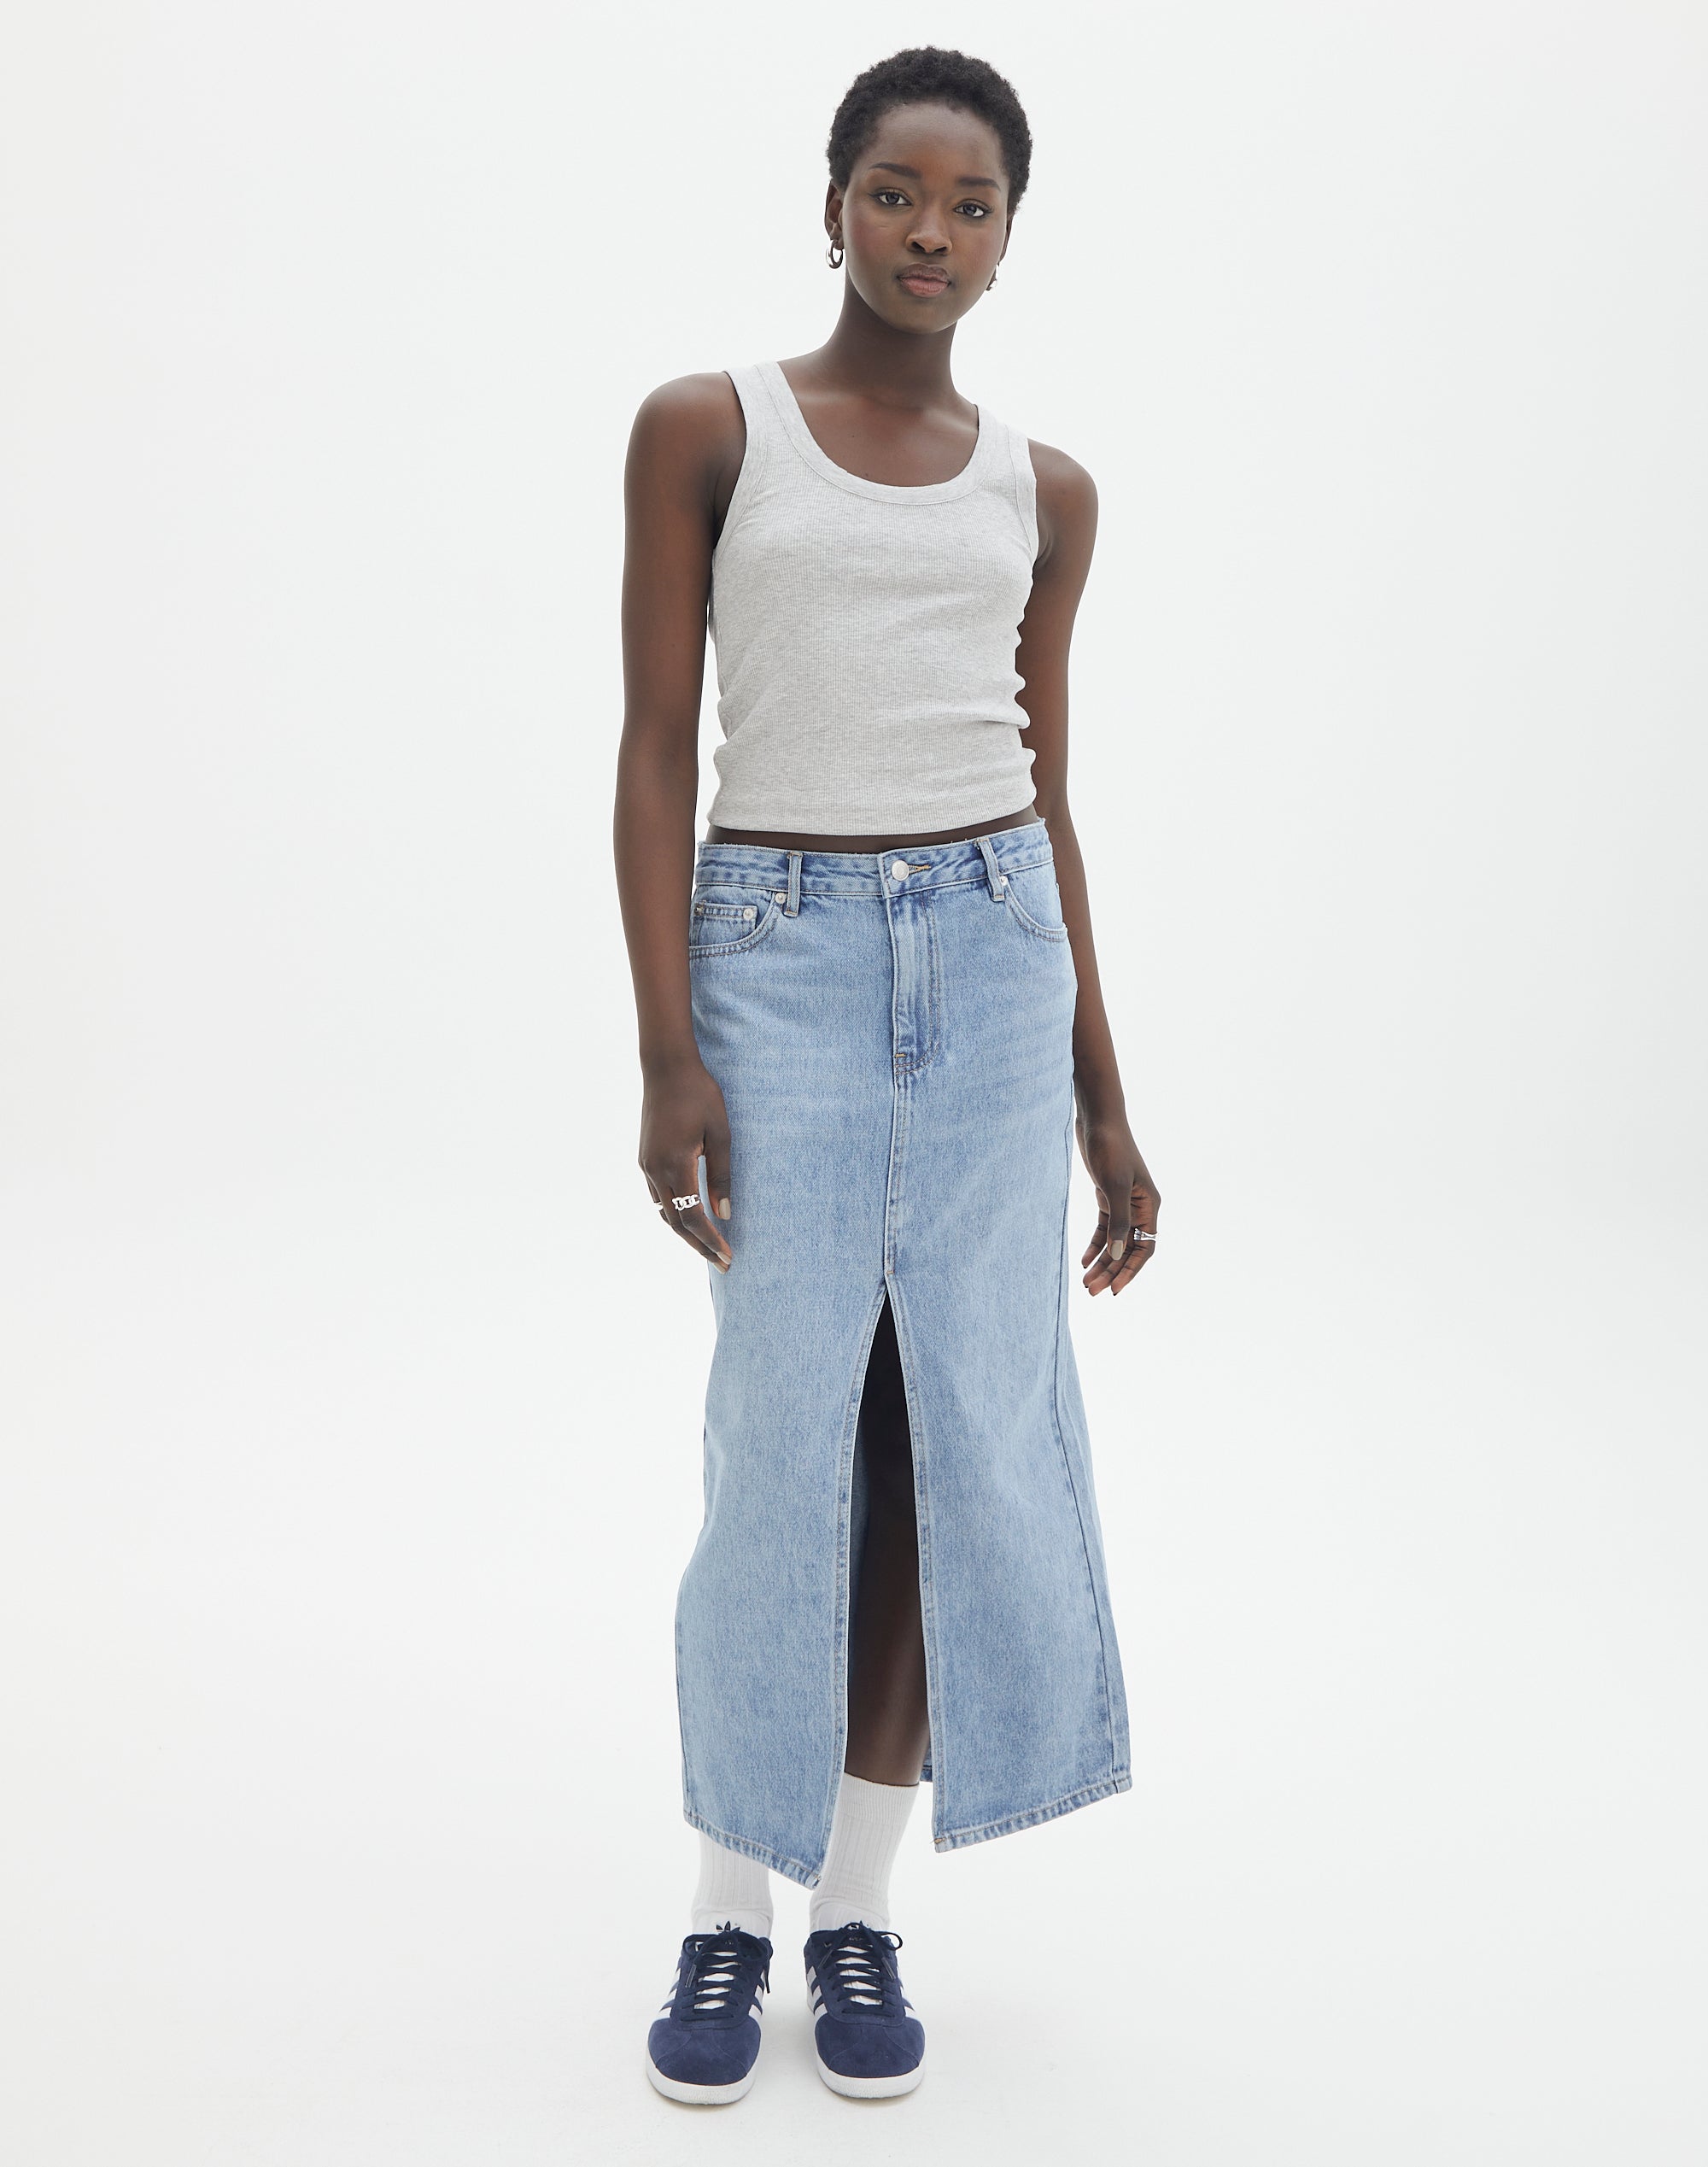 Pleated Skirt Midi A-line Circle for Women Elegant Wear - Etsy